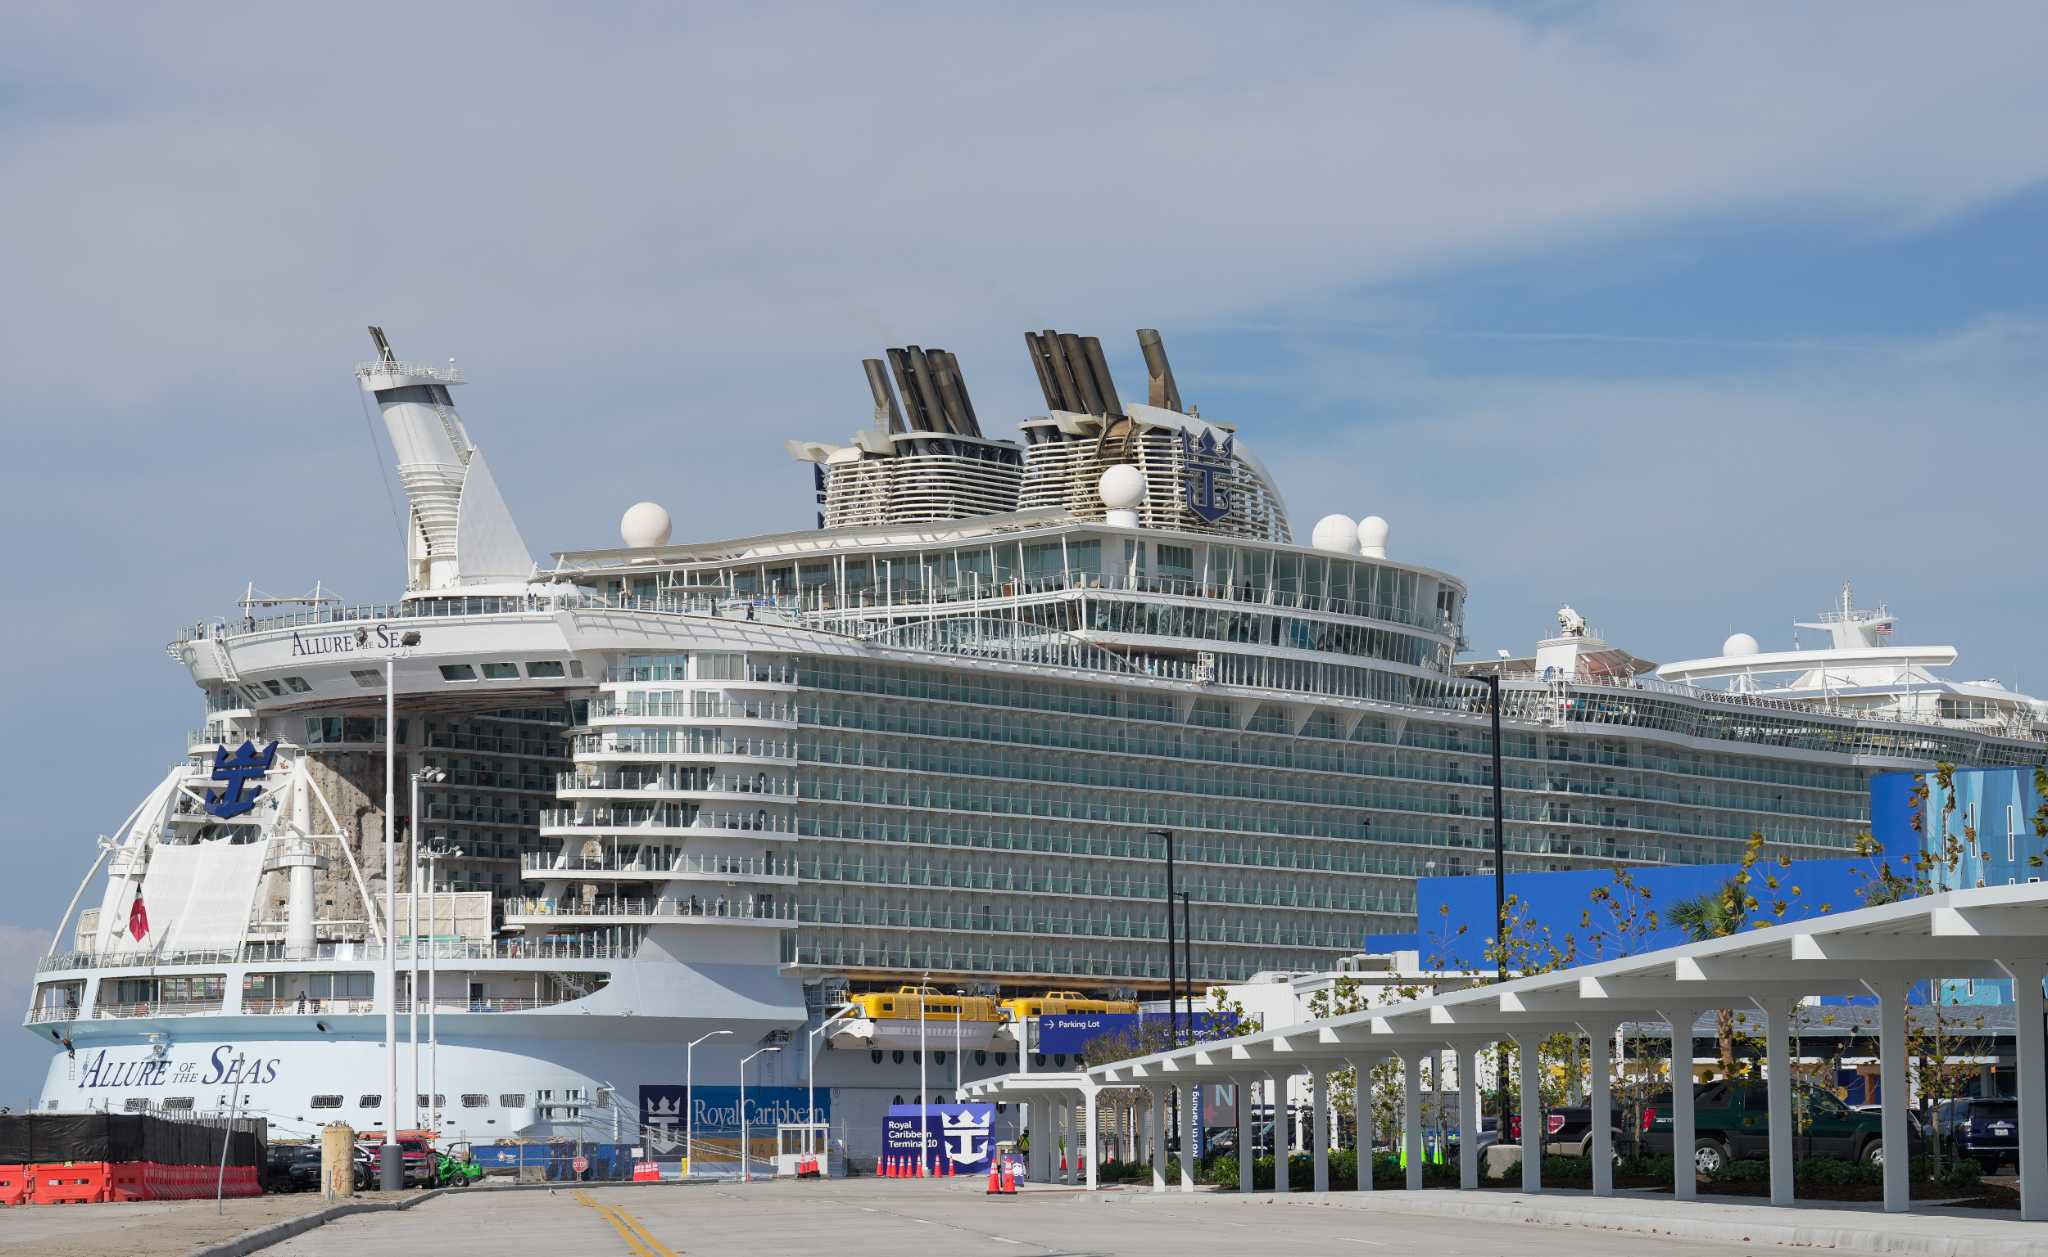 Shopping Mall, Allure of the Seas.  Cruise ship, Royal caribbean ships,  Cruise